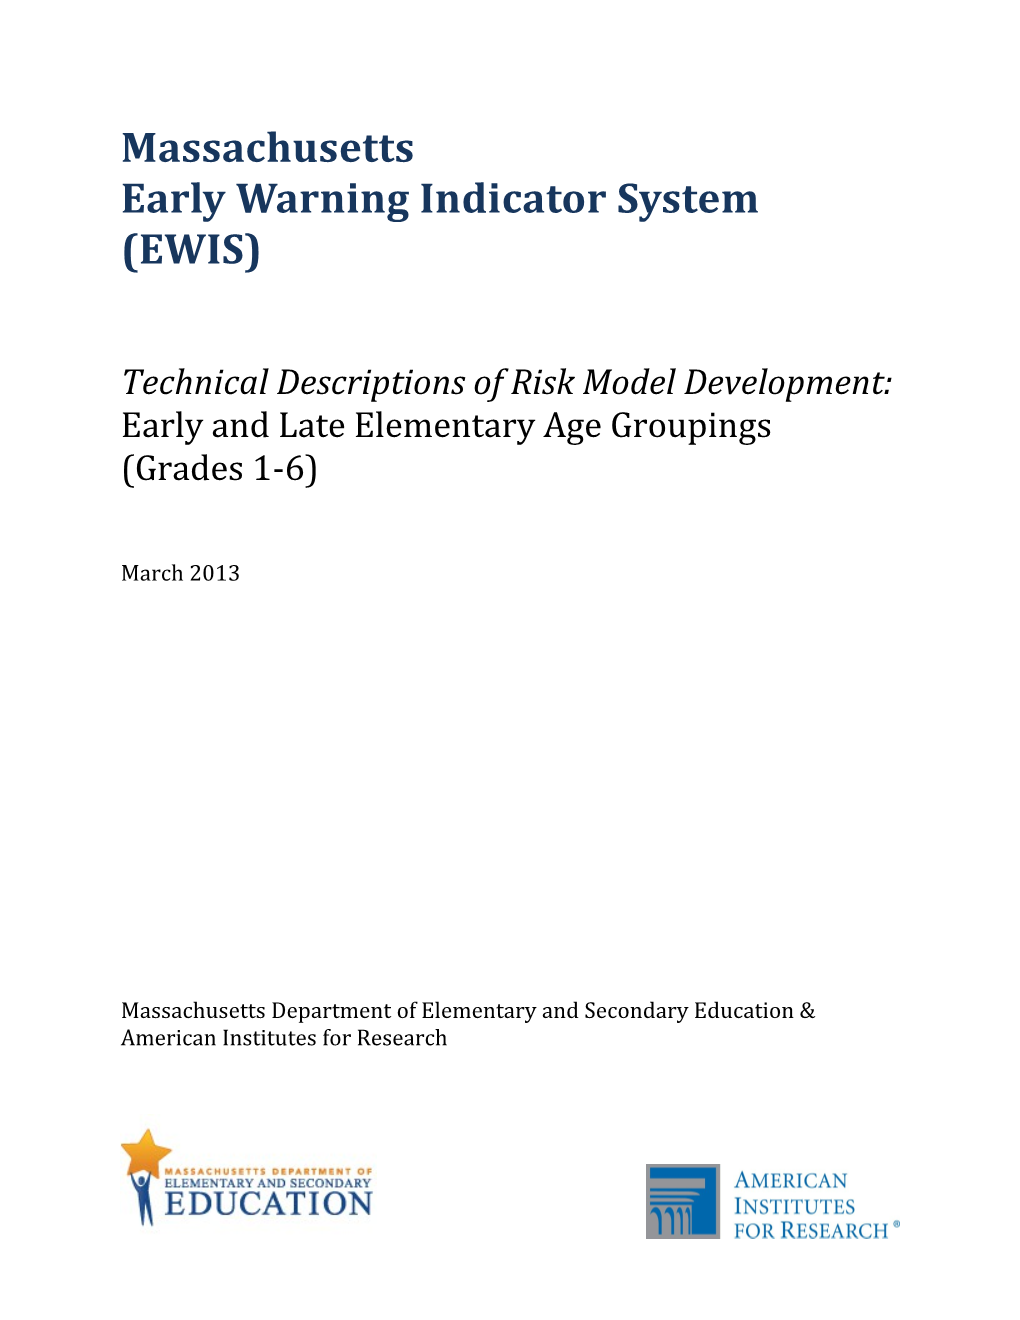 EWIS Technical Descriptions of Risk Model Development: Grades 1-6